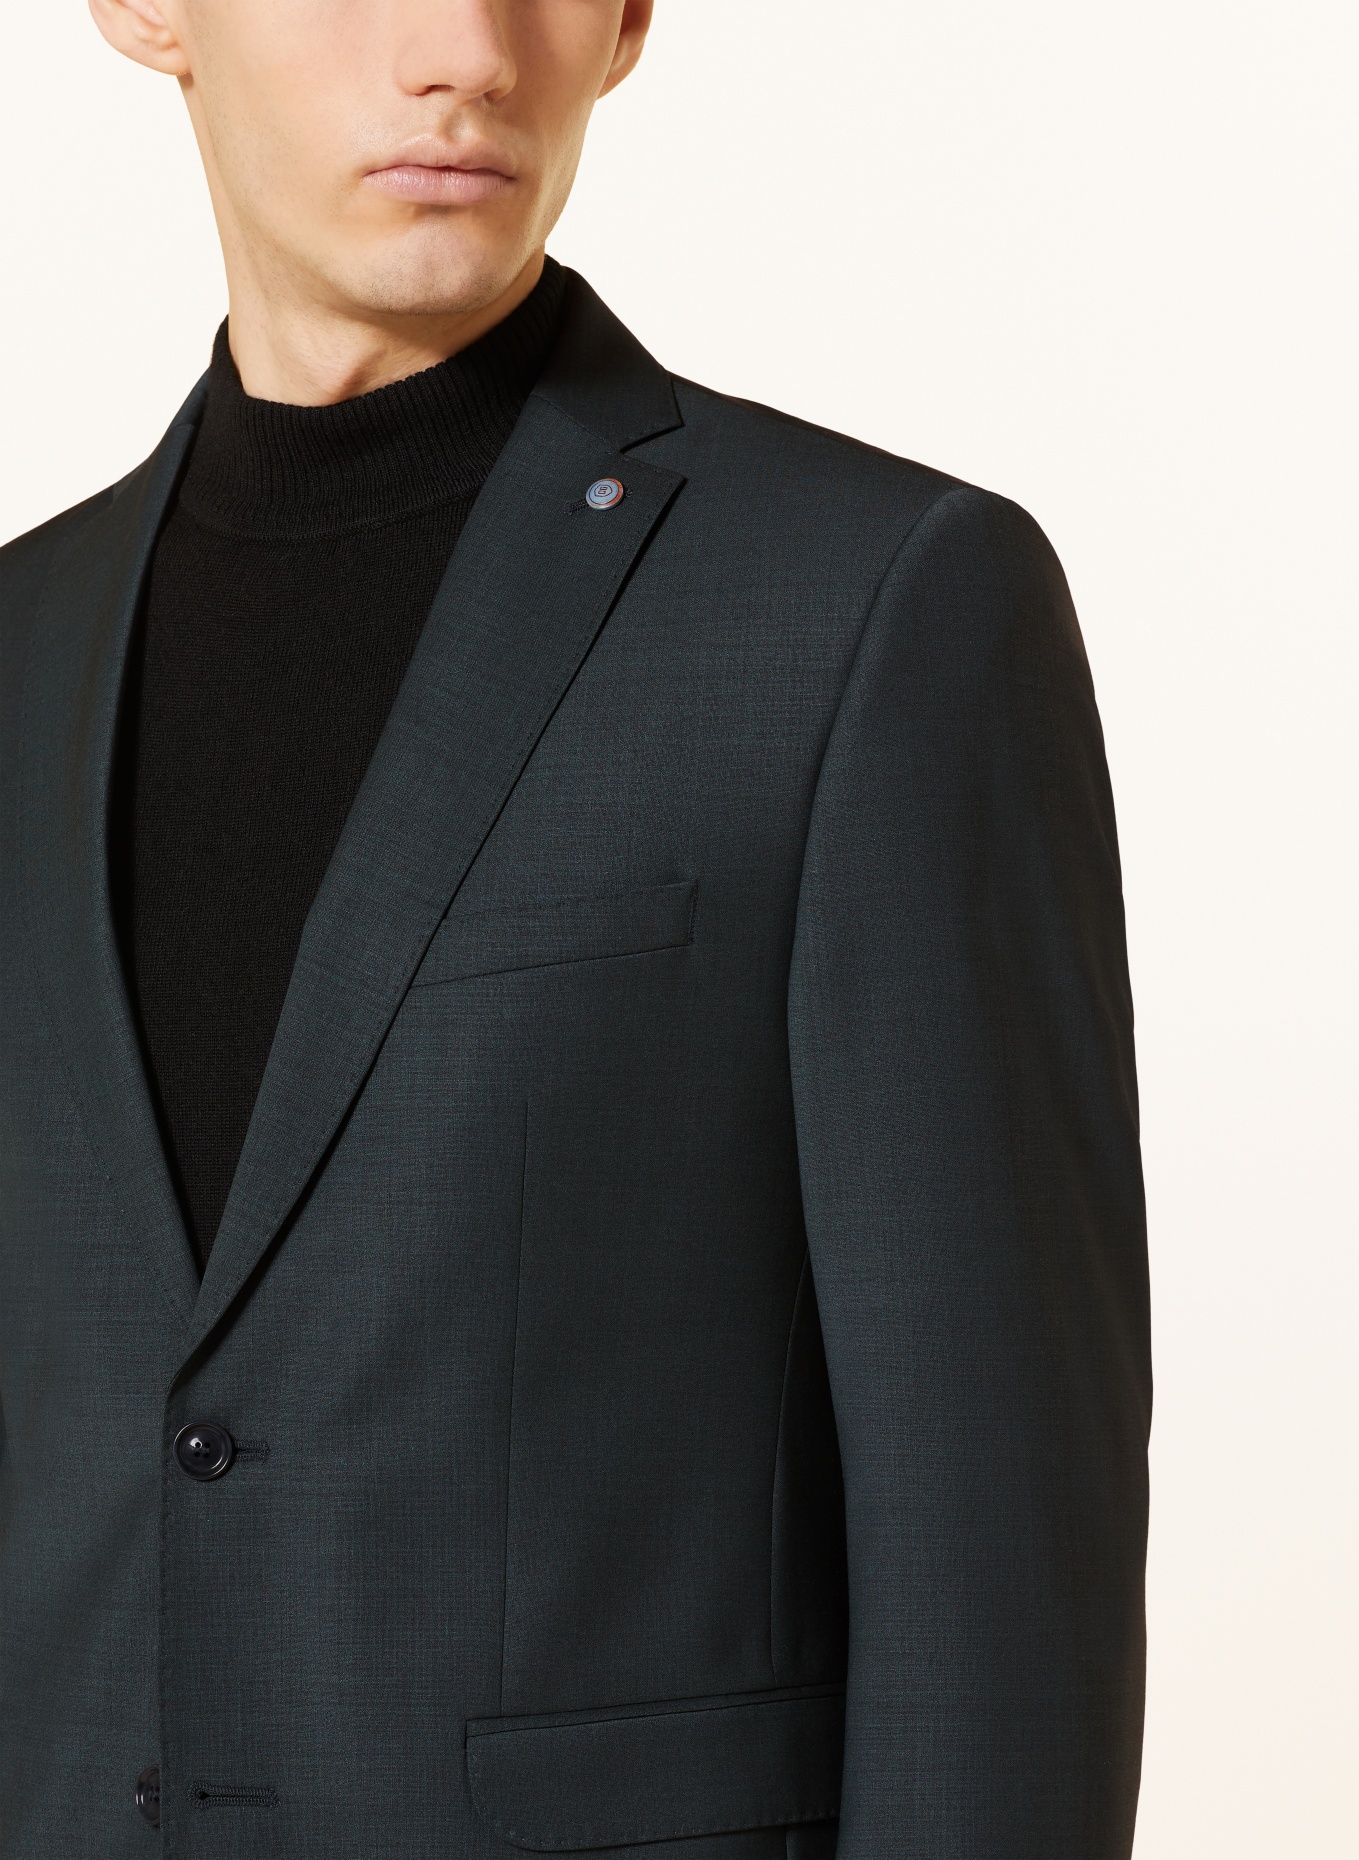 CG - CLUB of GENTS Suit jacket COLVIN slim fit, Color: 53 gruen dunkel (Image 5)